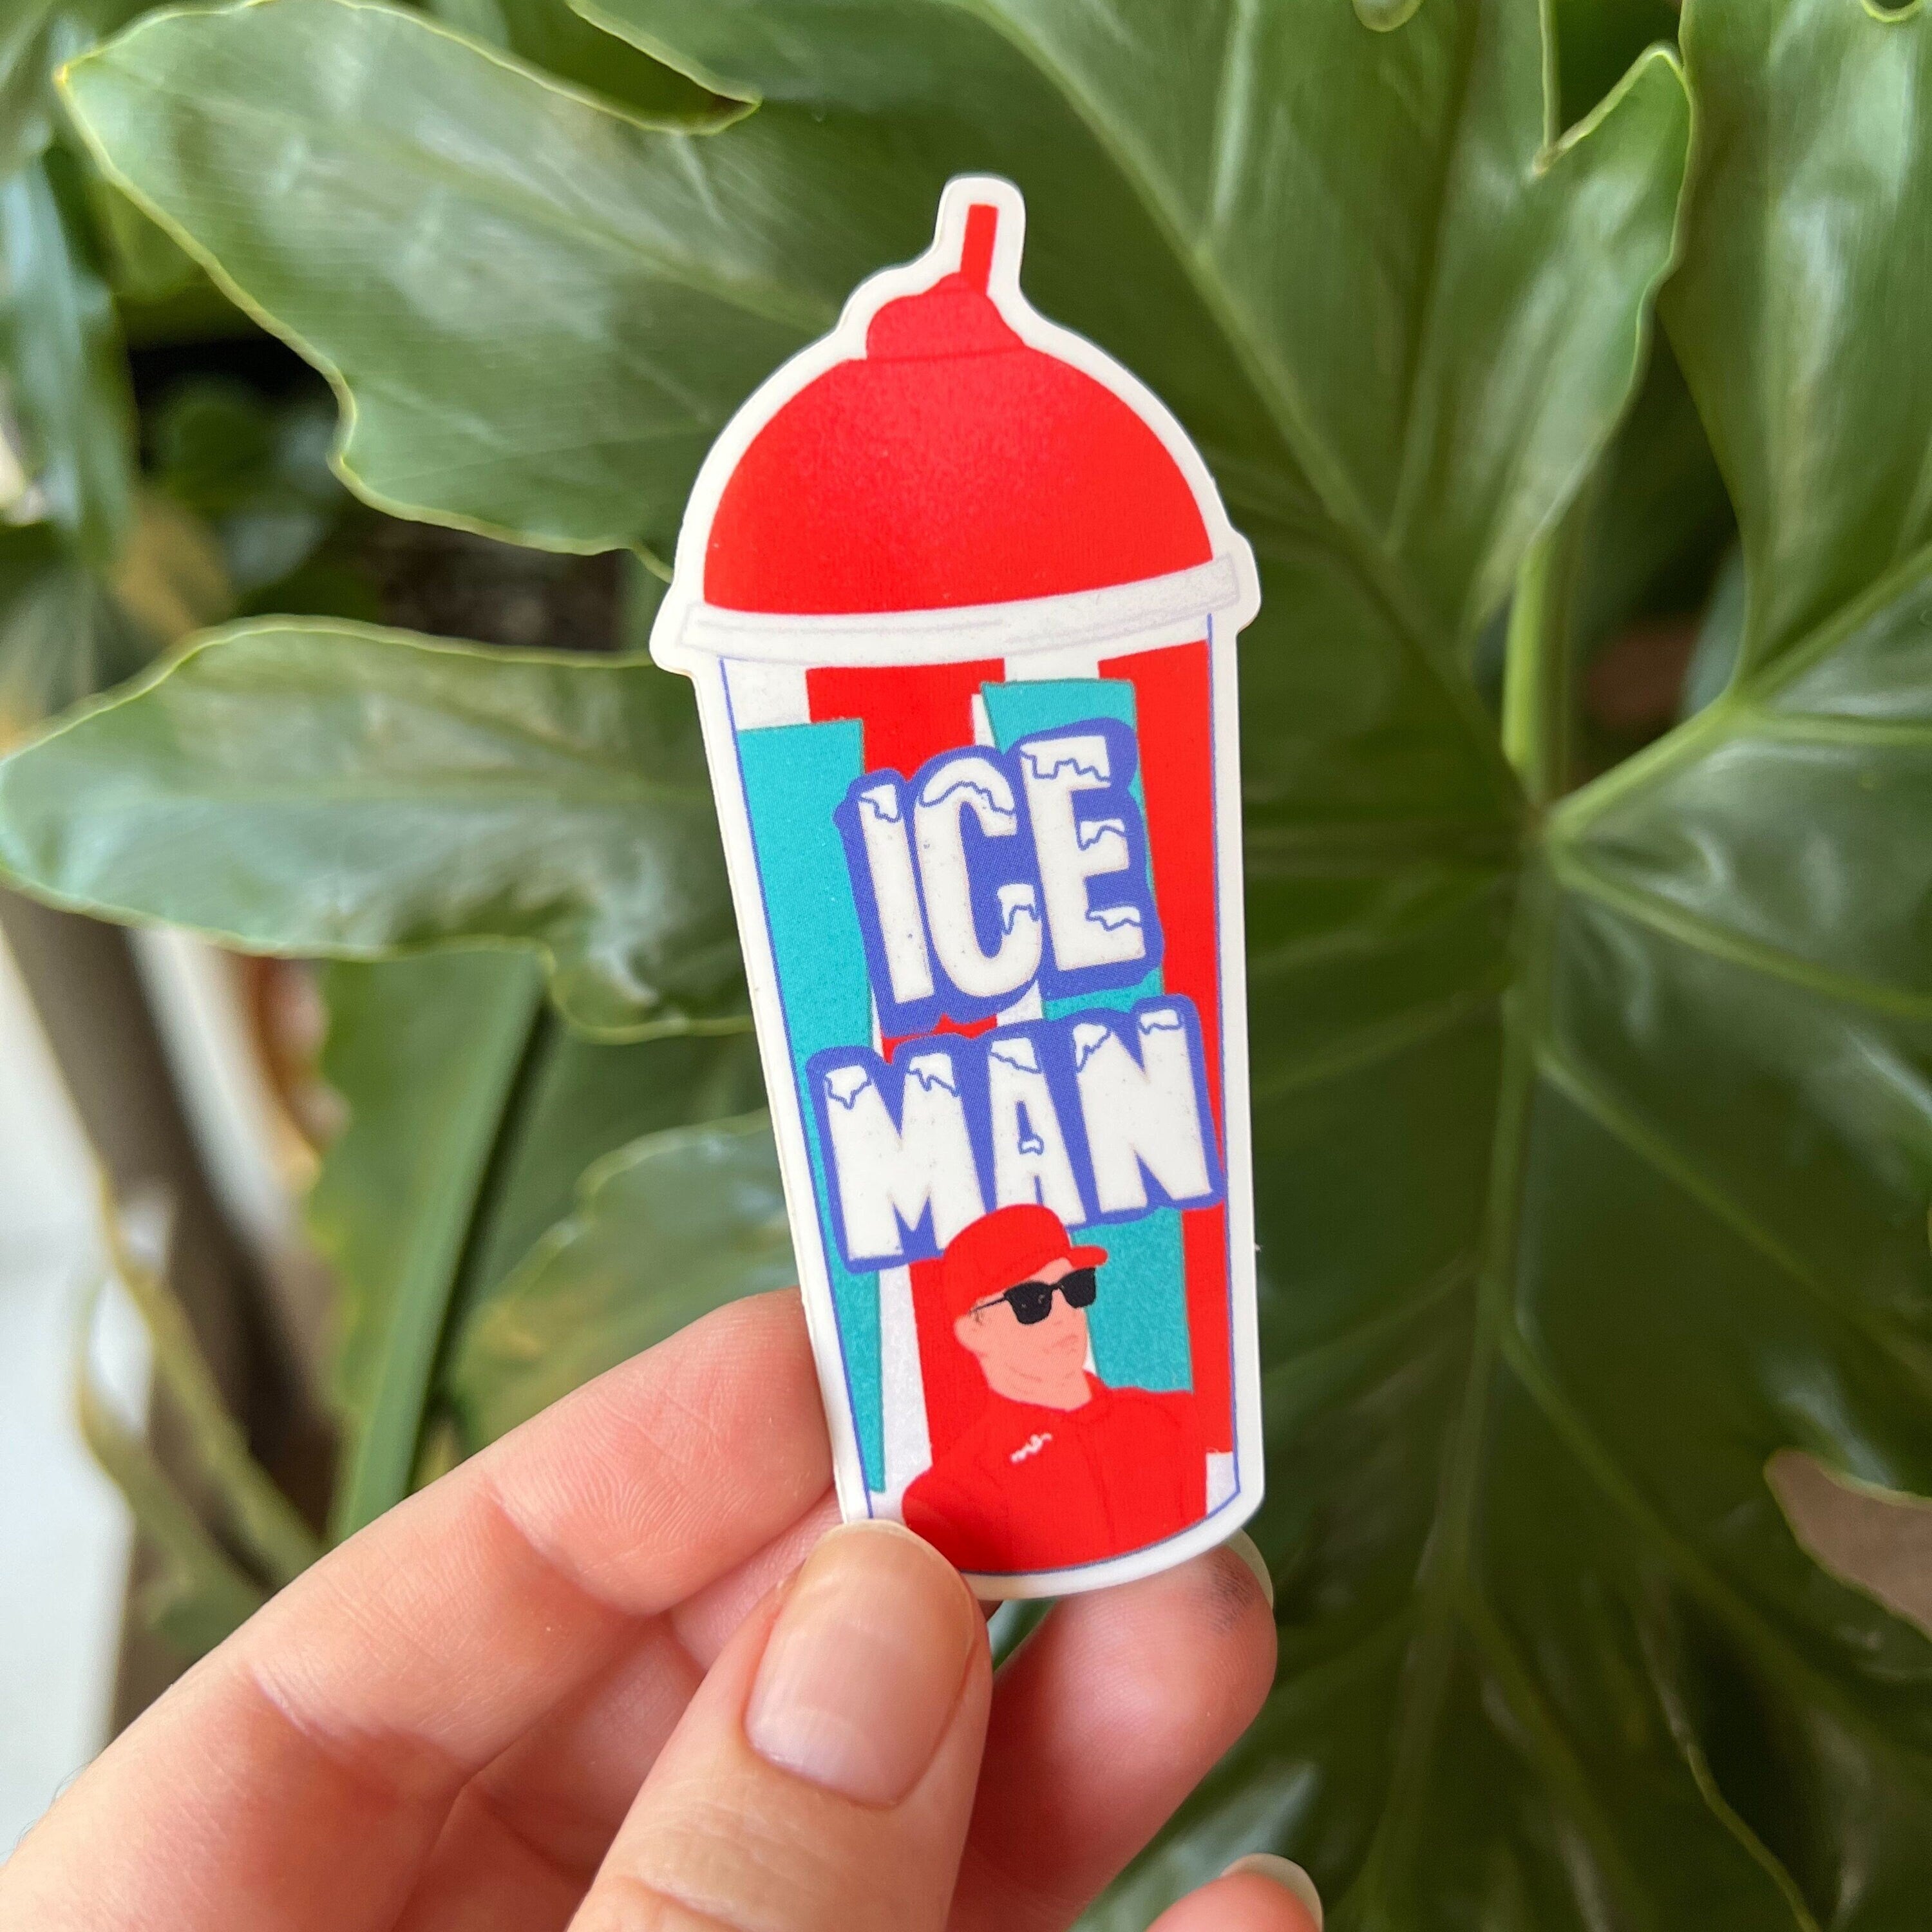 Kimi Raikkonen "Ice Man" sticker | F1 sticker for laptops and water bottles